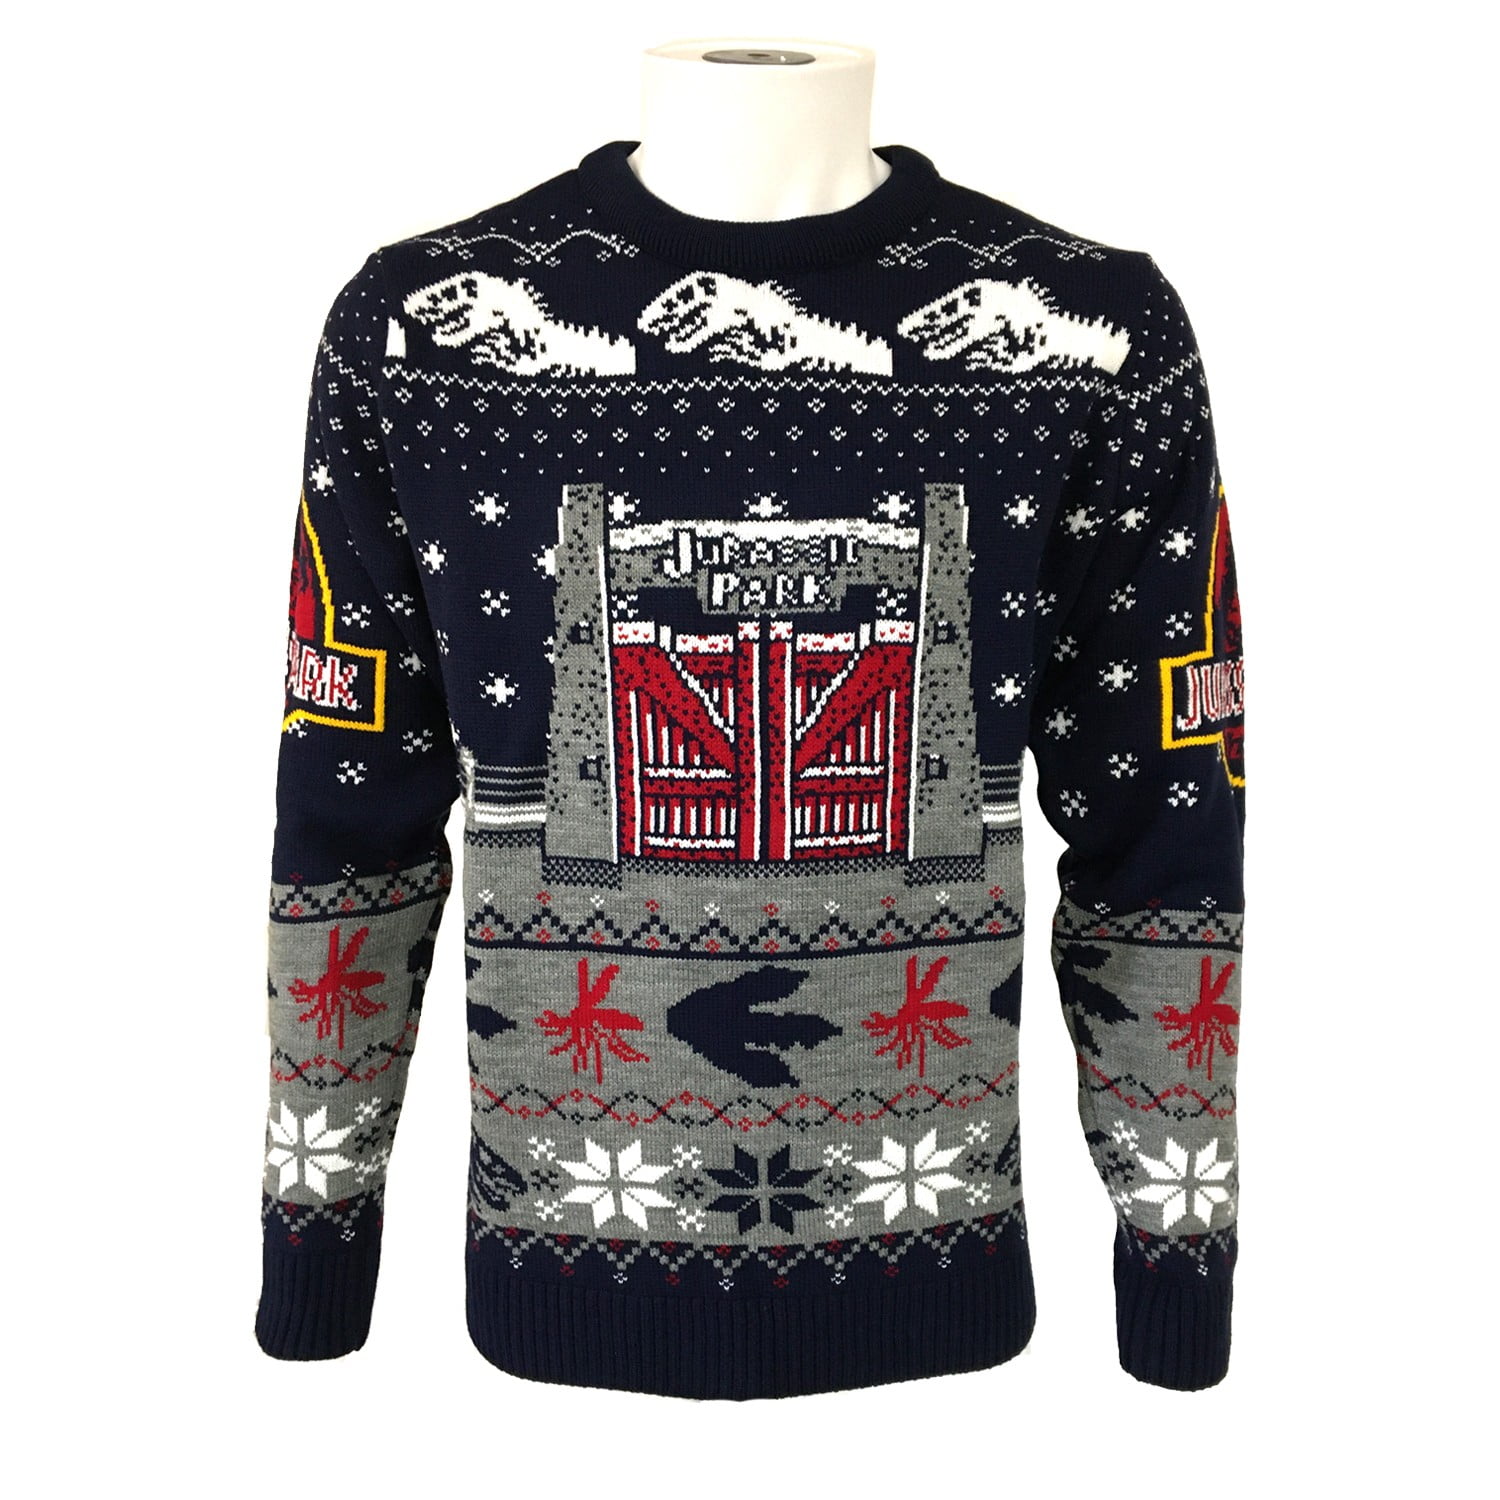 Numskull Unisex Official Rocky Knitted Christmas Jumper for Men or Women Ugly Novelty Sweater Gift